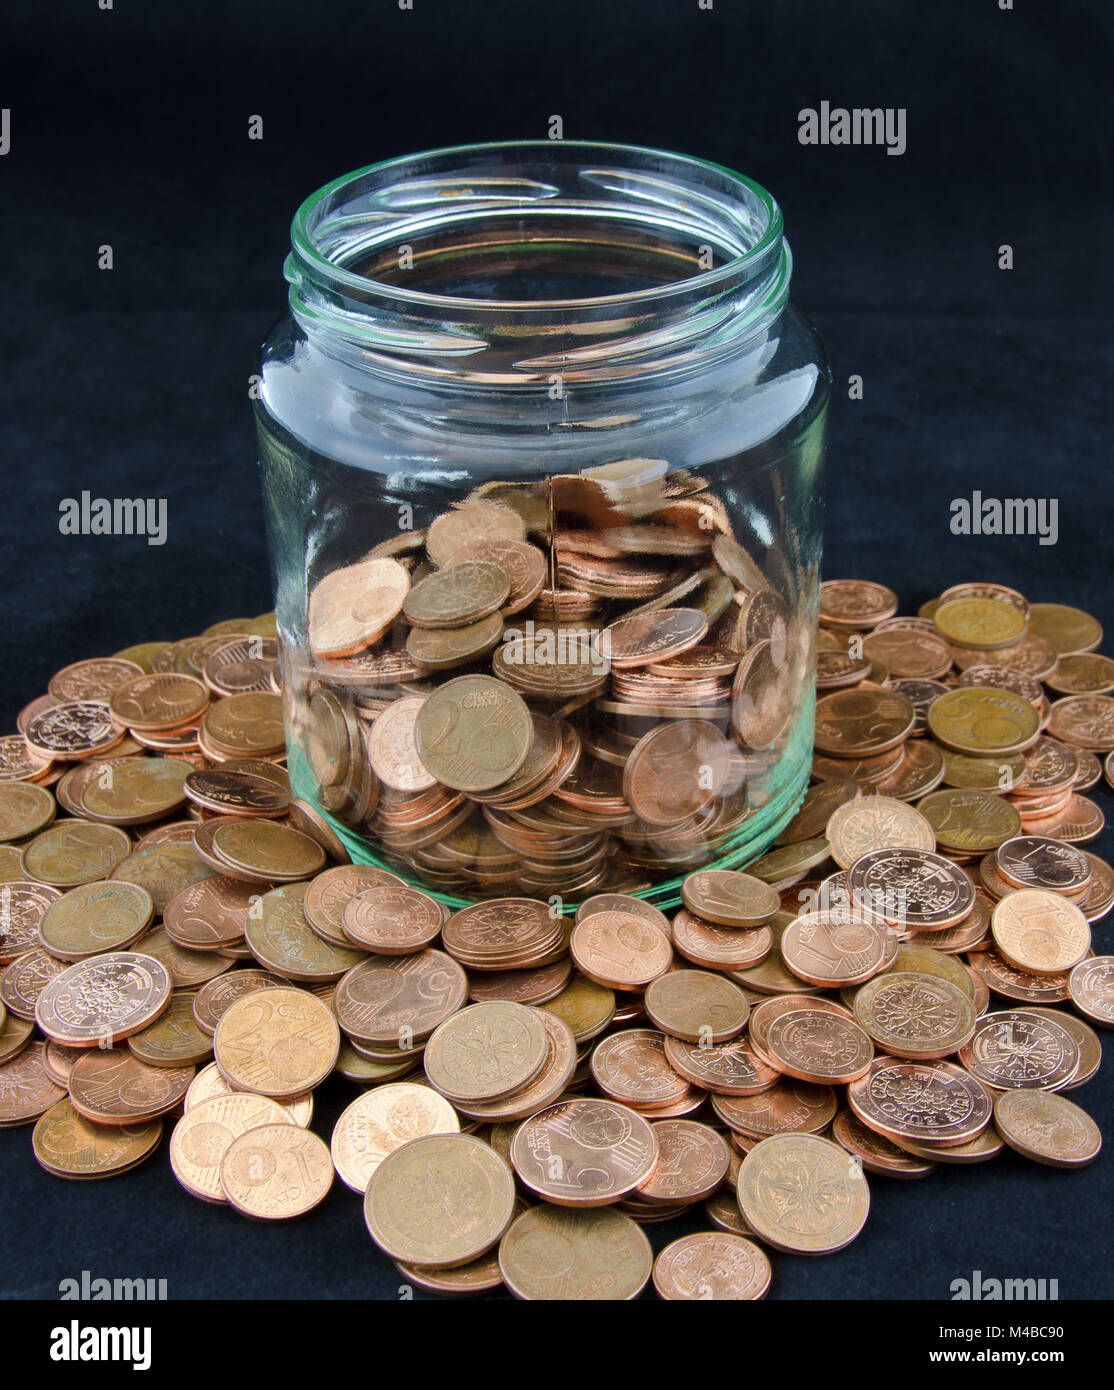 jam jar with Eurocent coins Stock Photo